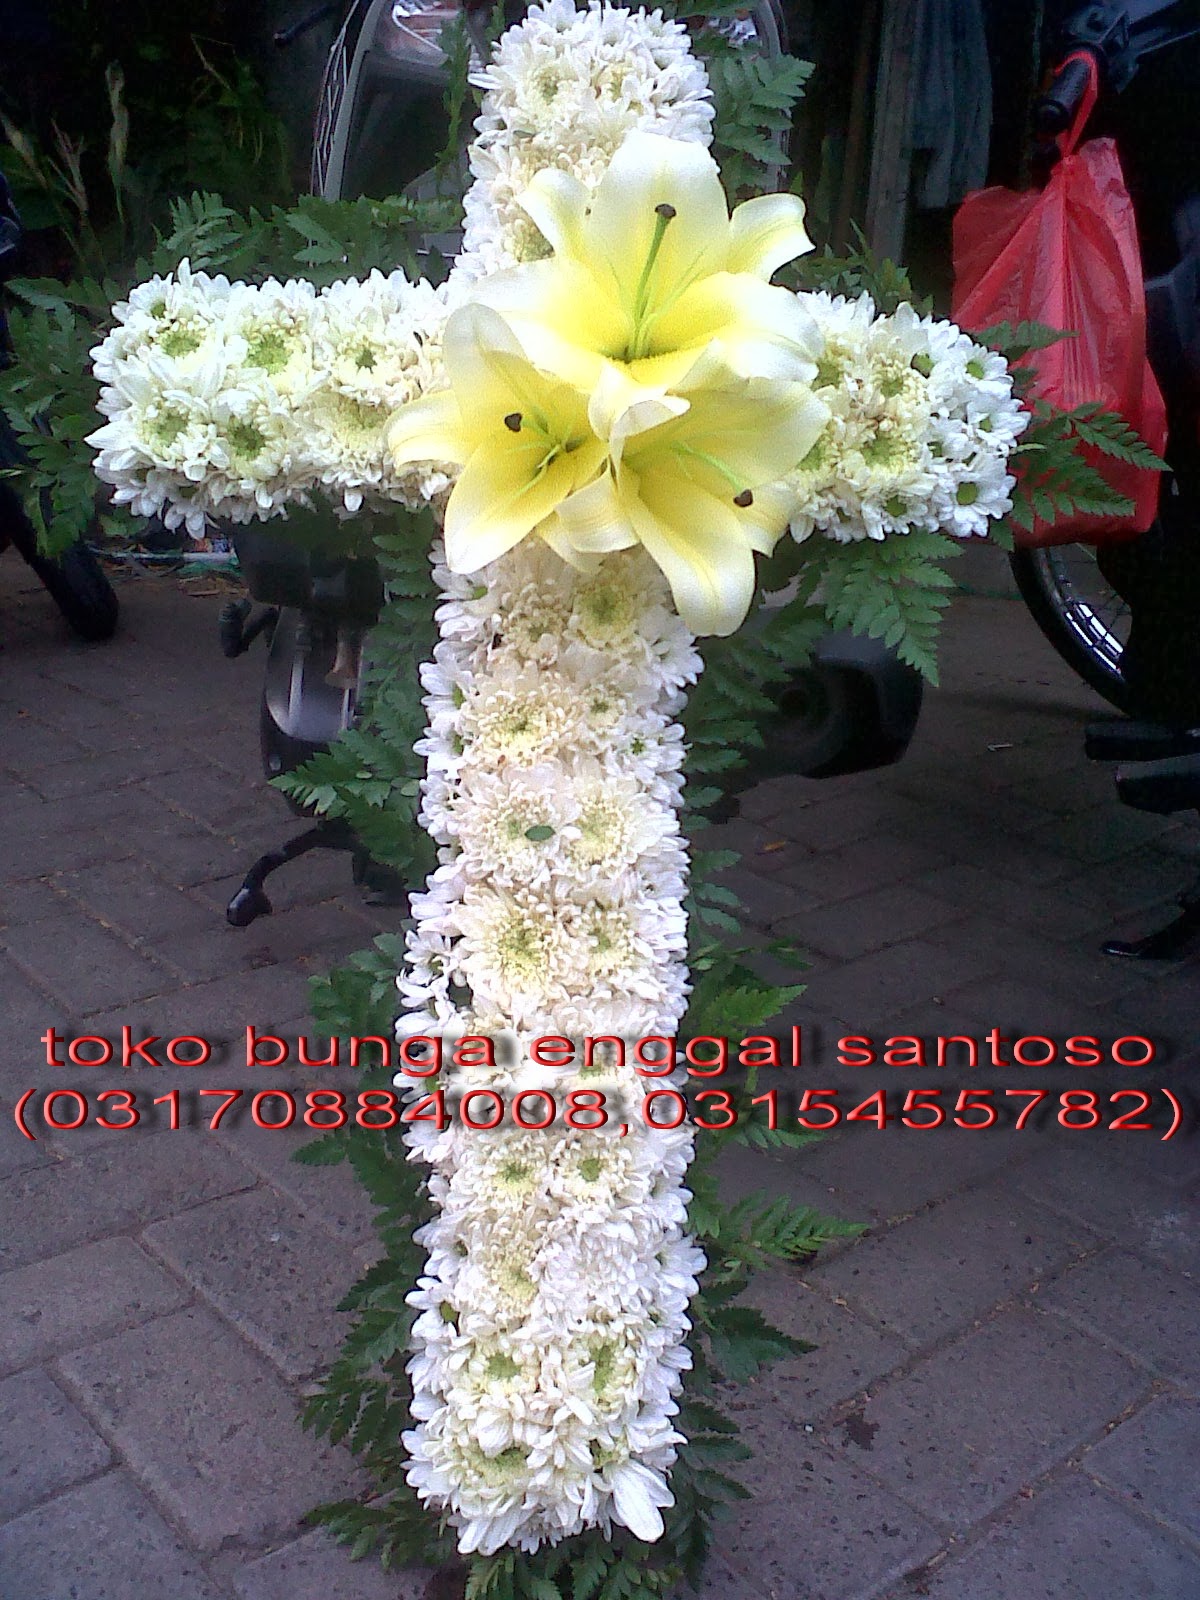 toko bunga  sidoarjo 085733331108 rangkaian bunga  gereja mimbar  altar